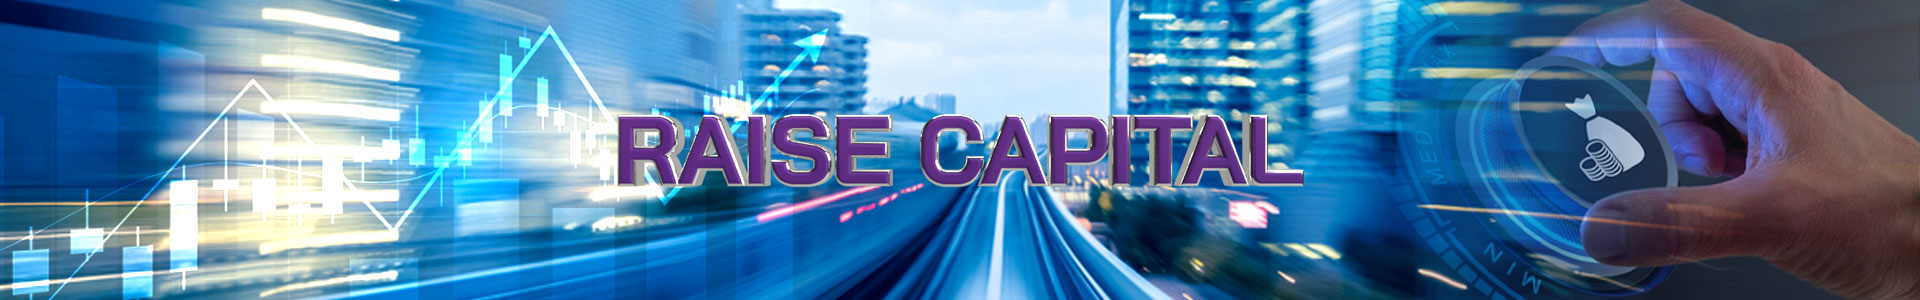 Raise Capital - IPO Conference, New York, USA